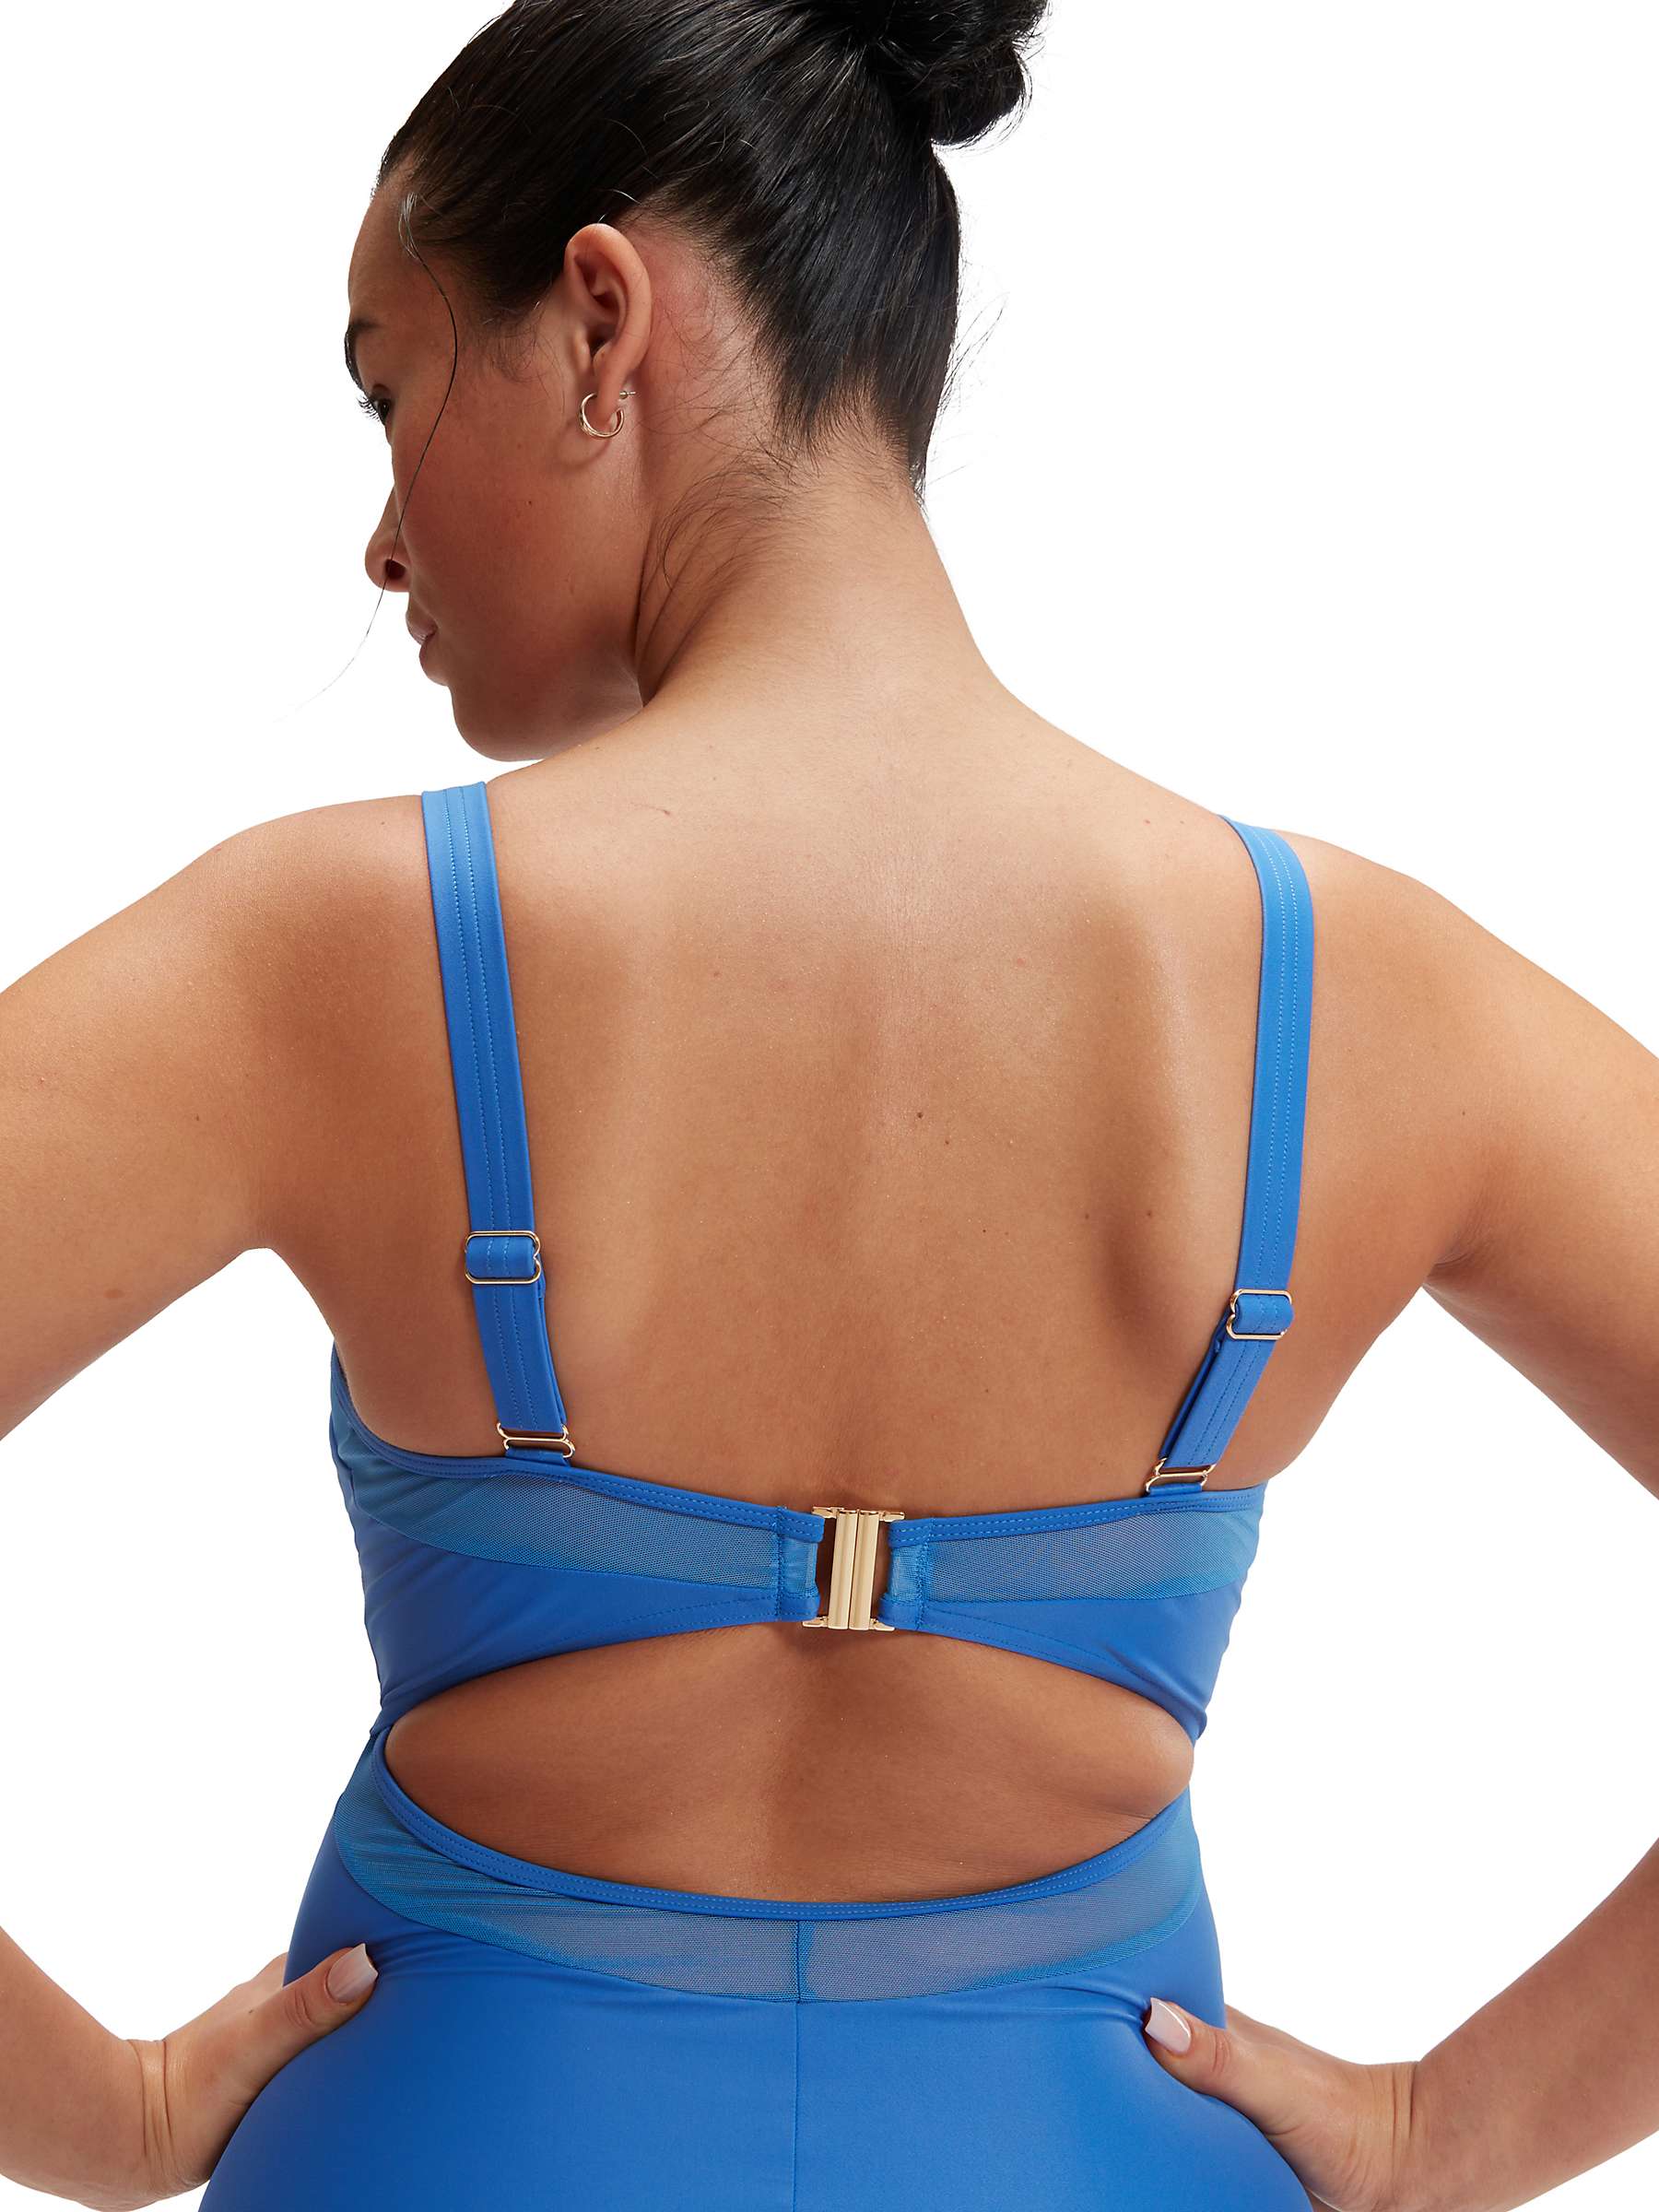 Buy Speedo Shaping Banduae Swimsuit, Sevres Blue Online at johnlewis.com